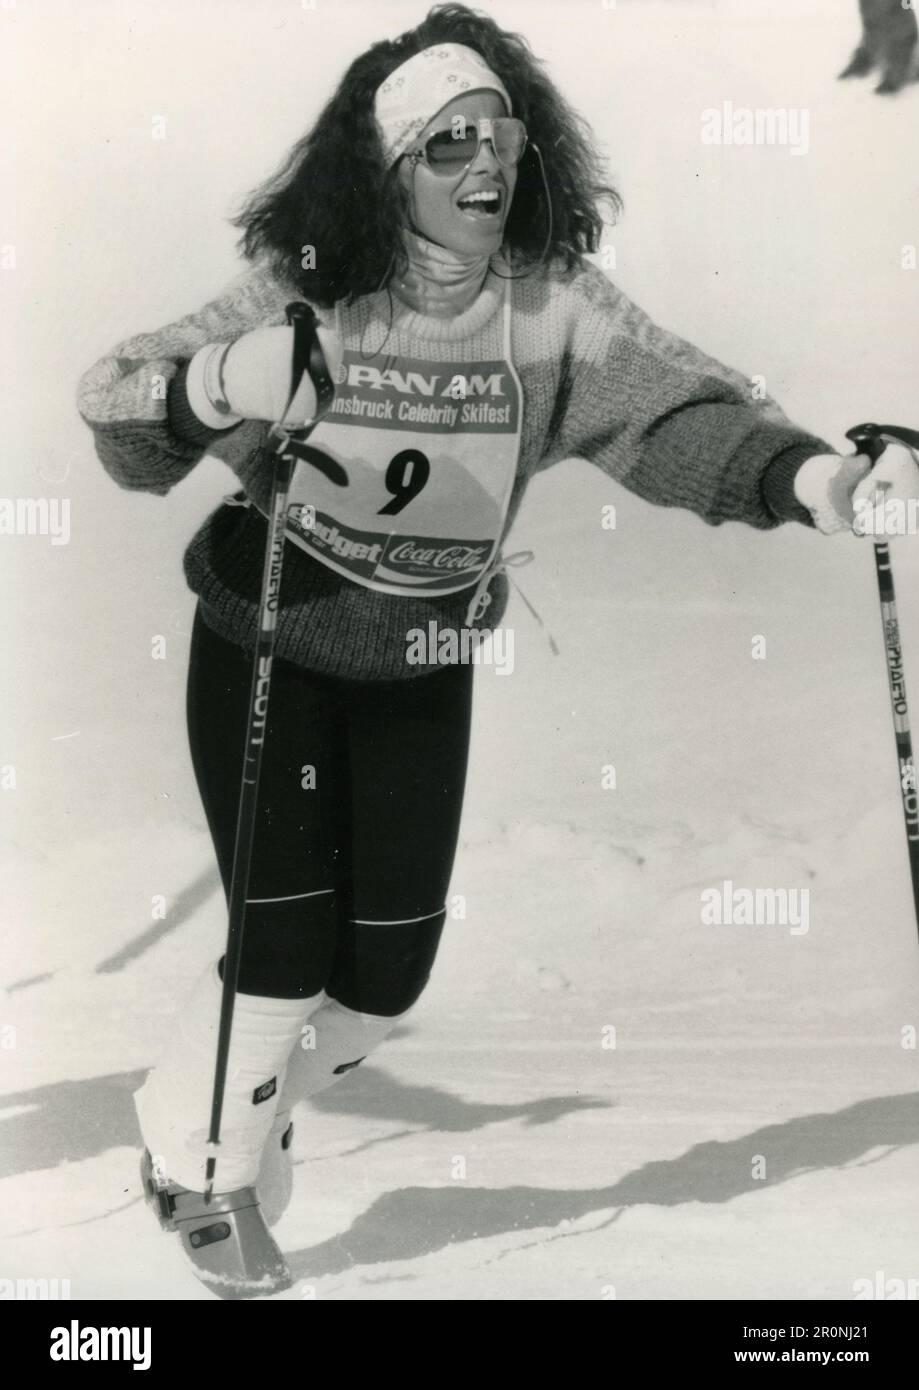 American actress Shari Belafonte skiing, USA 1987 Stock Photo